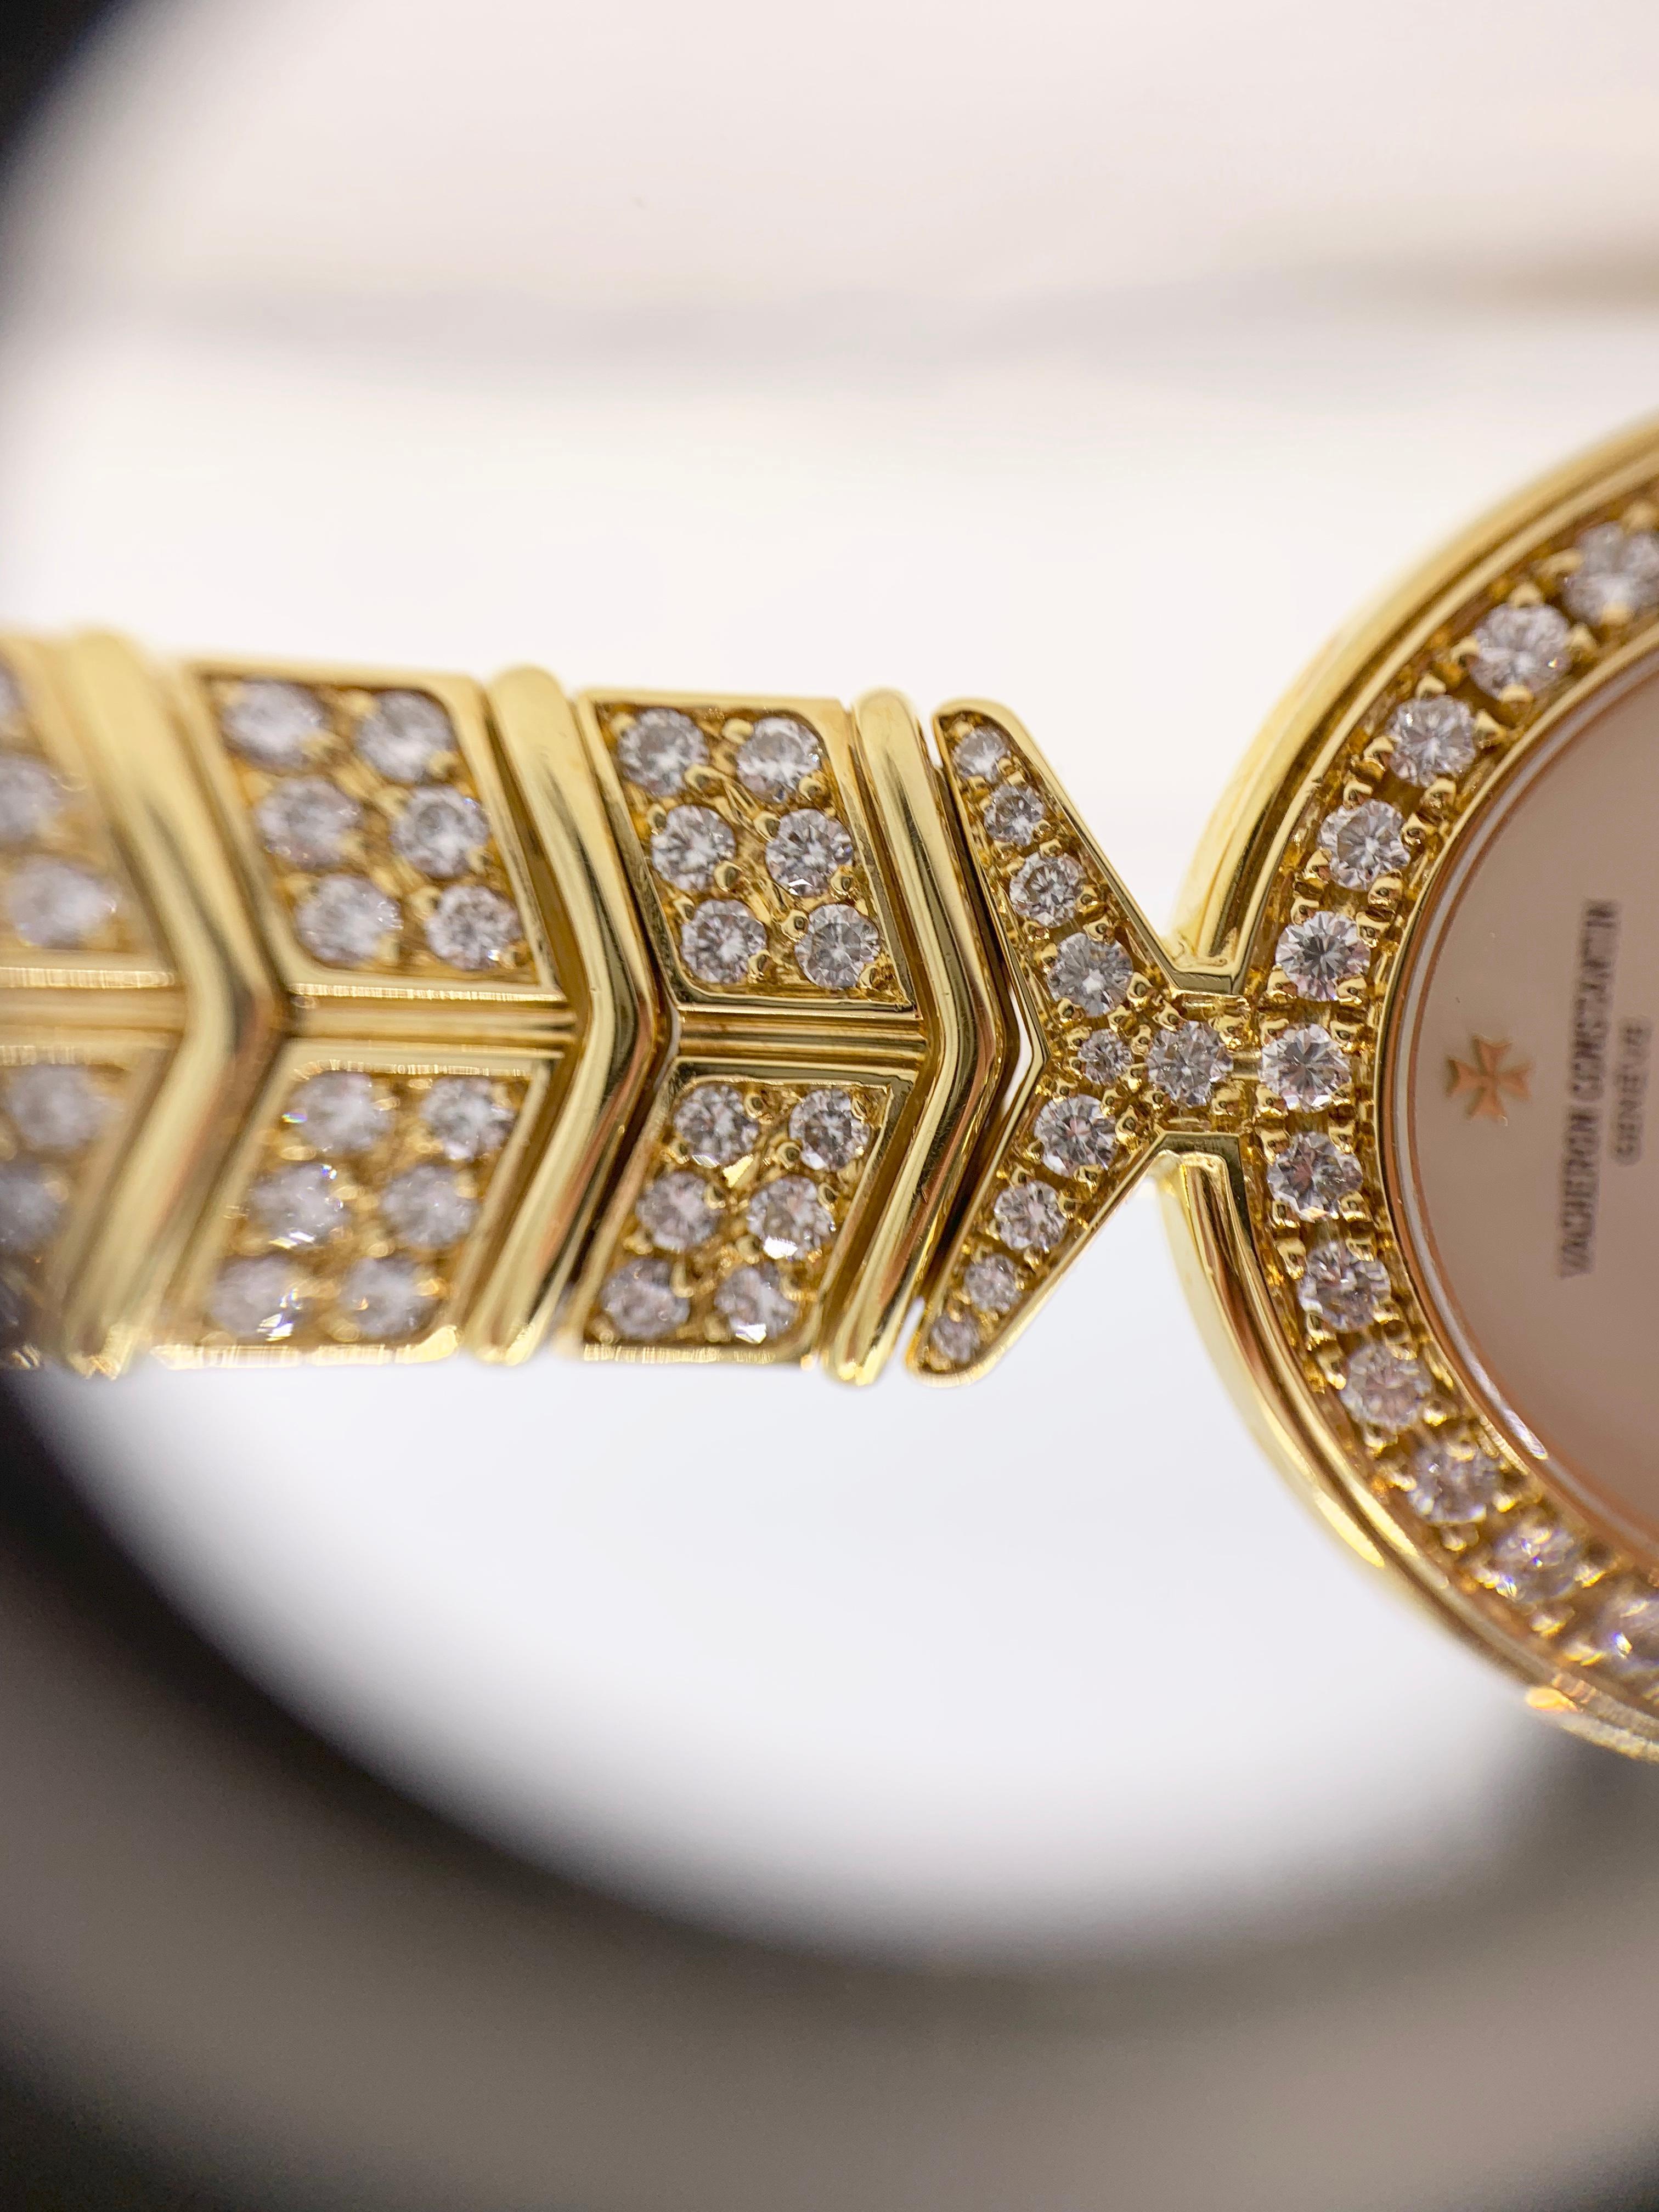 Vacheron Constantin 18k Gold All Diamond Malta Watch For Sale 1